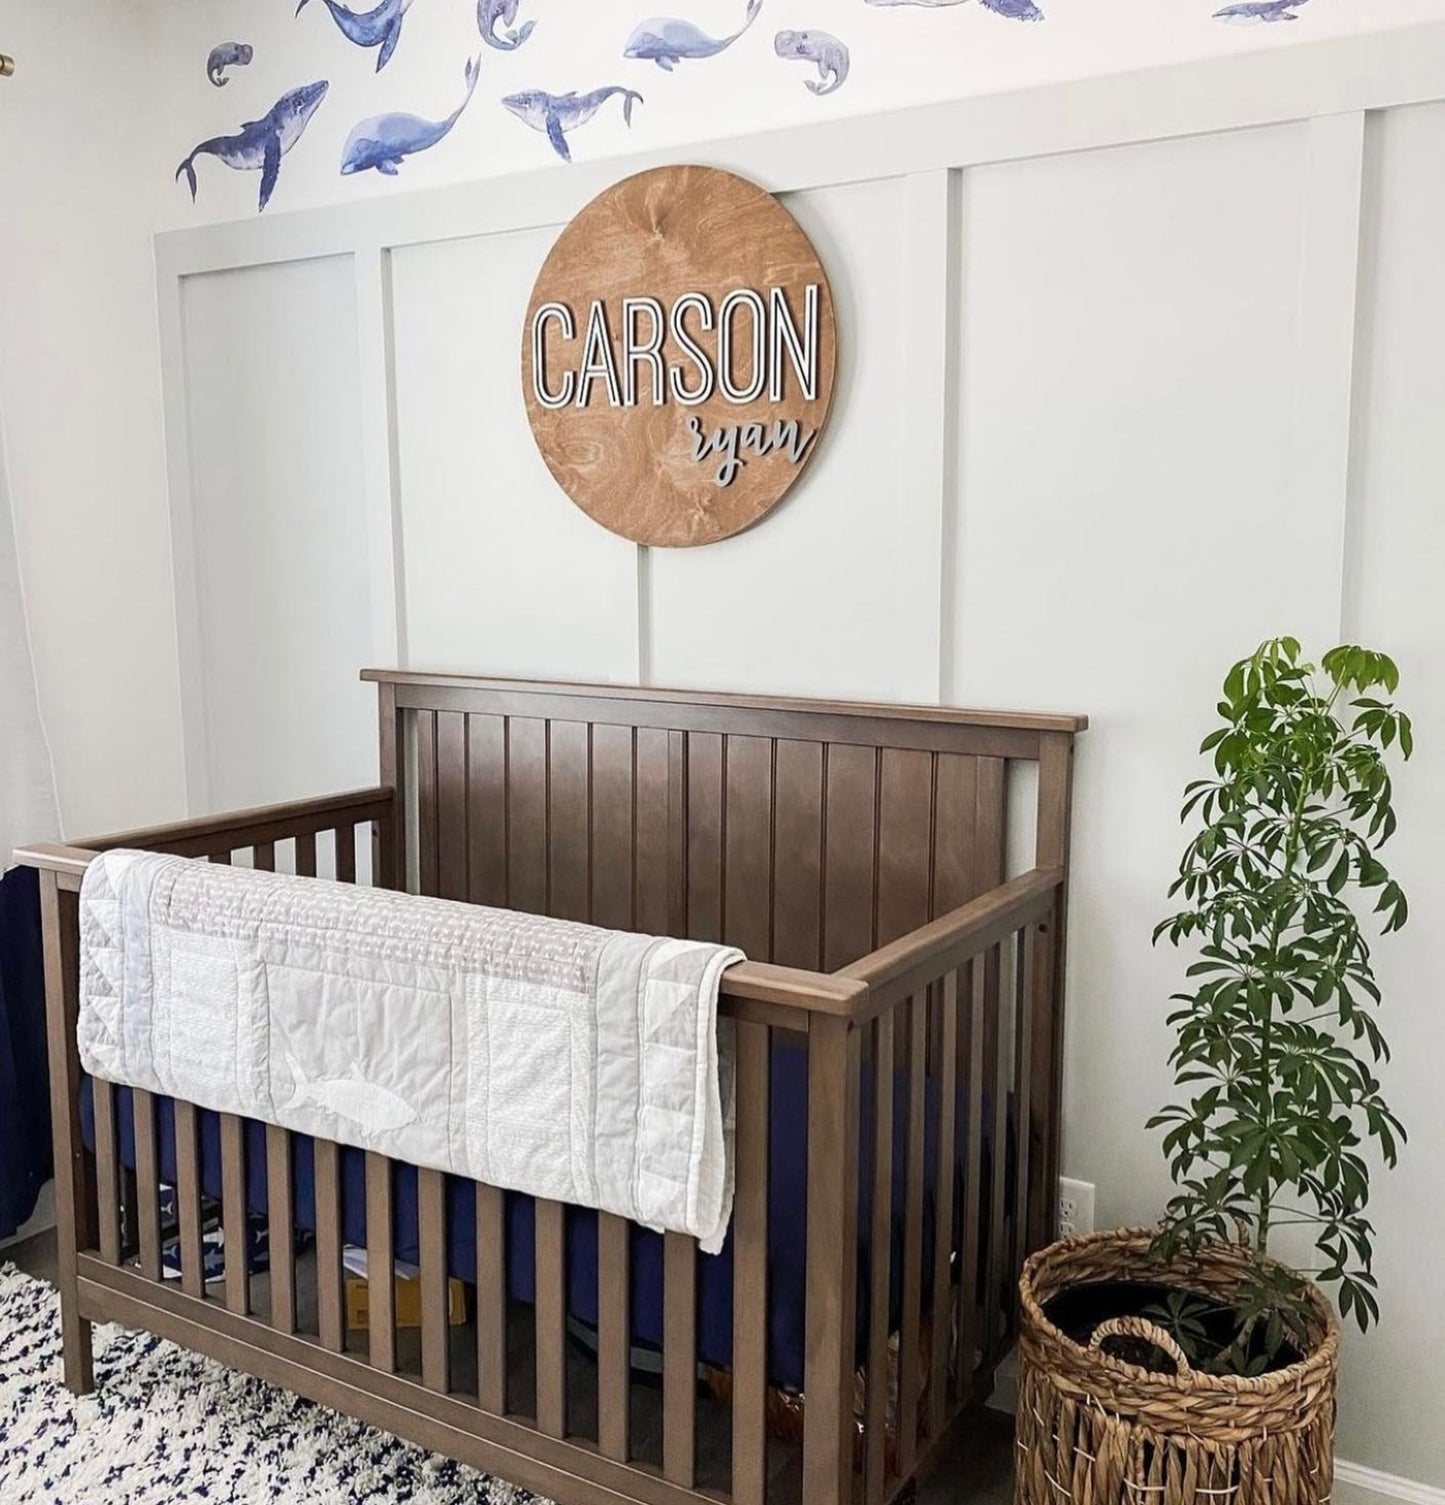 The Carson Nursery Round Sign